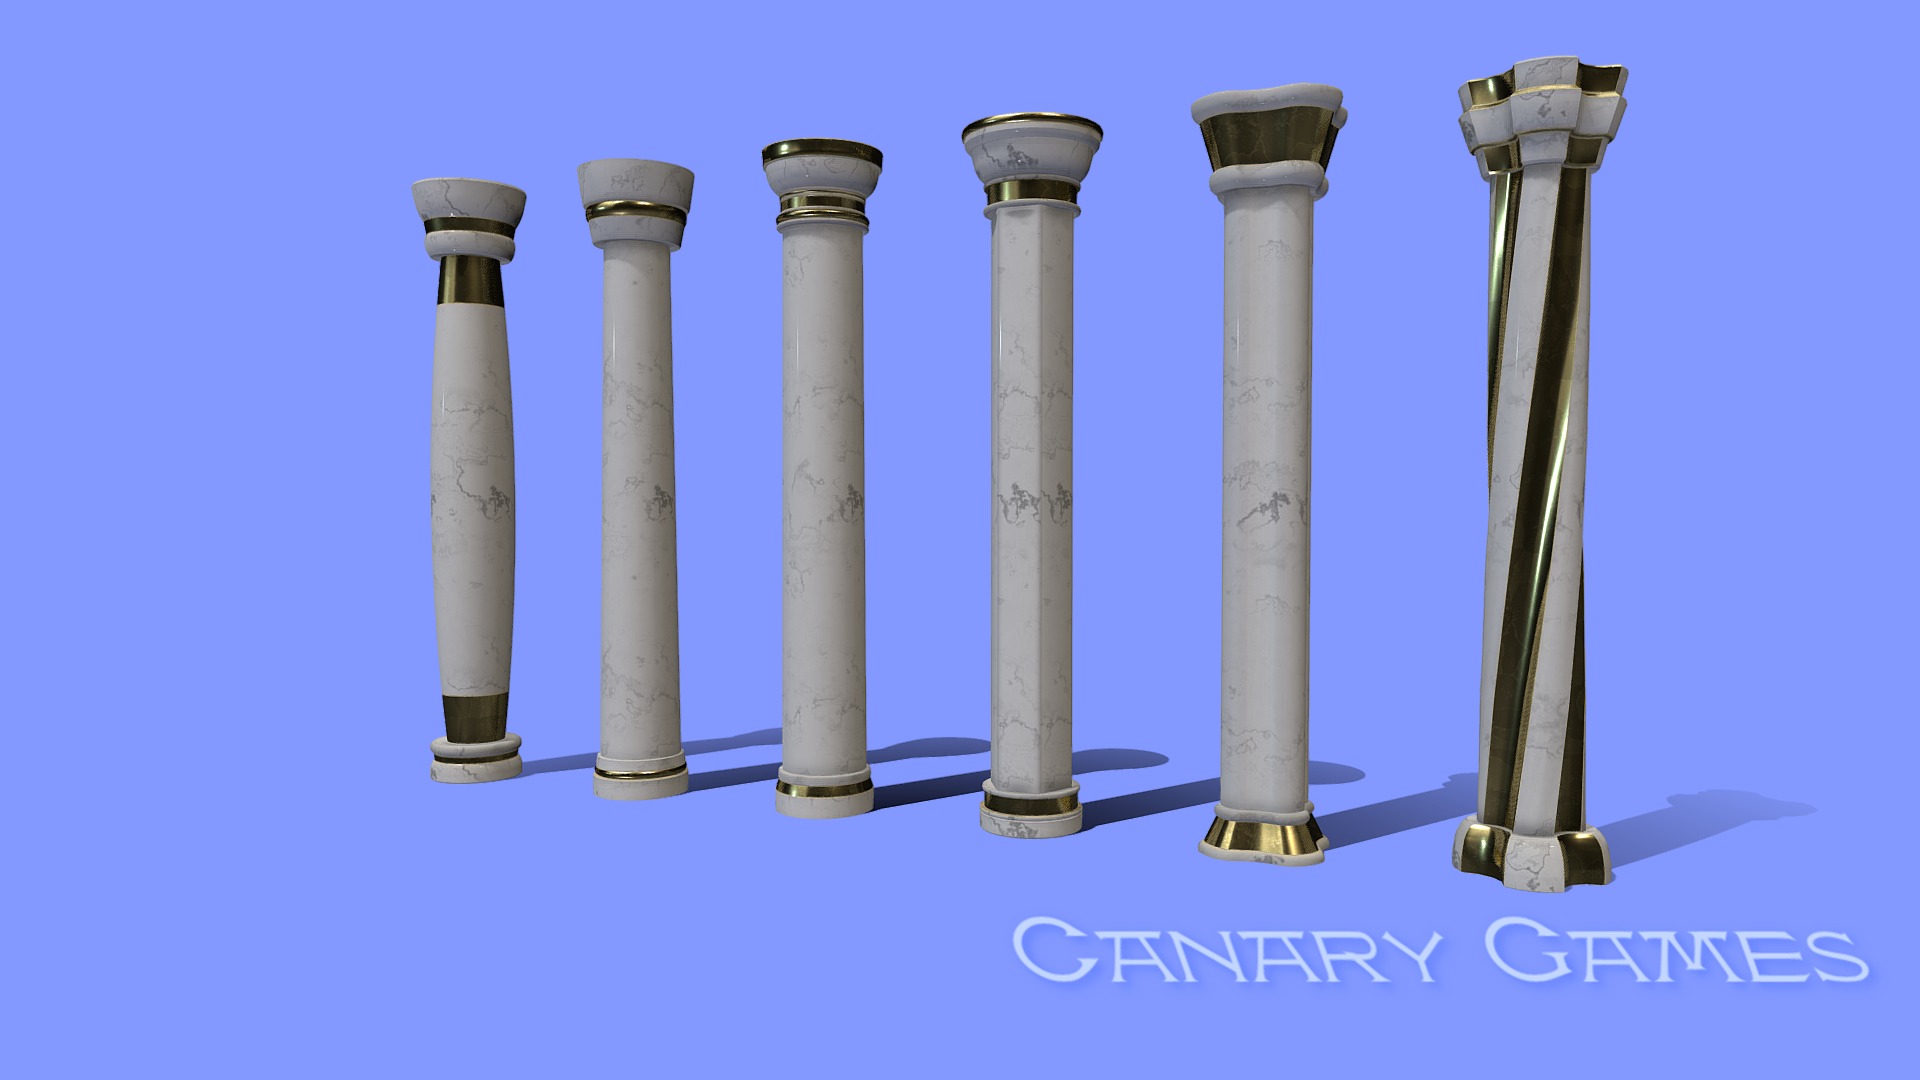 3D model Columnas Set 1 – Columns Set 1 - This is a 3D model of the Columnas Set 1 - Columns Set 1. The 3D model is about a row of columns.